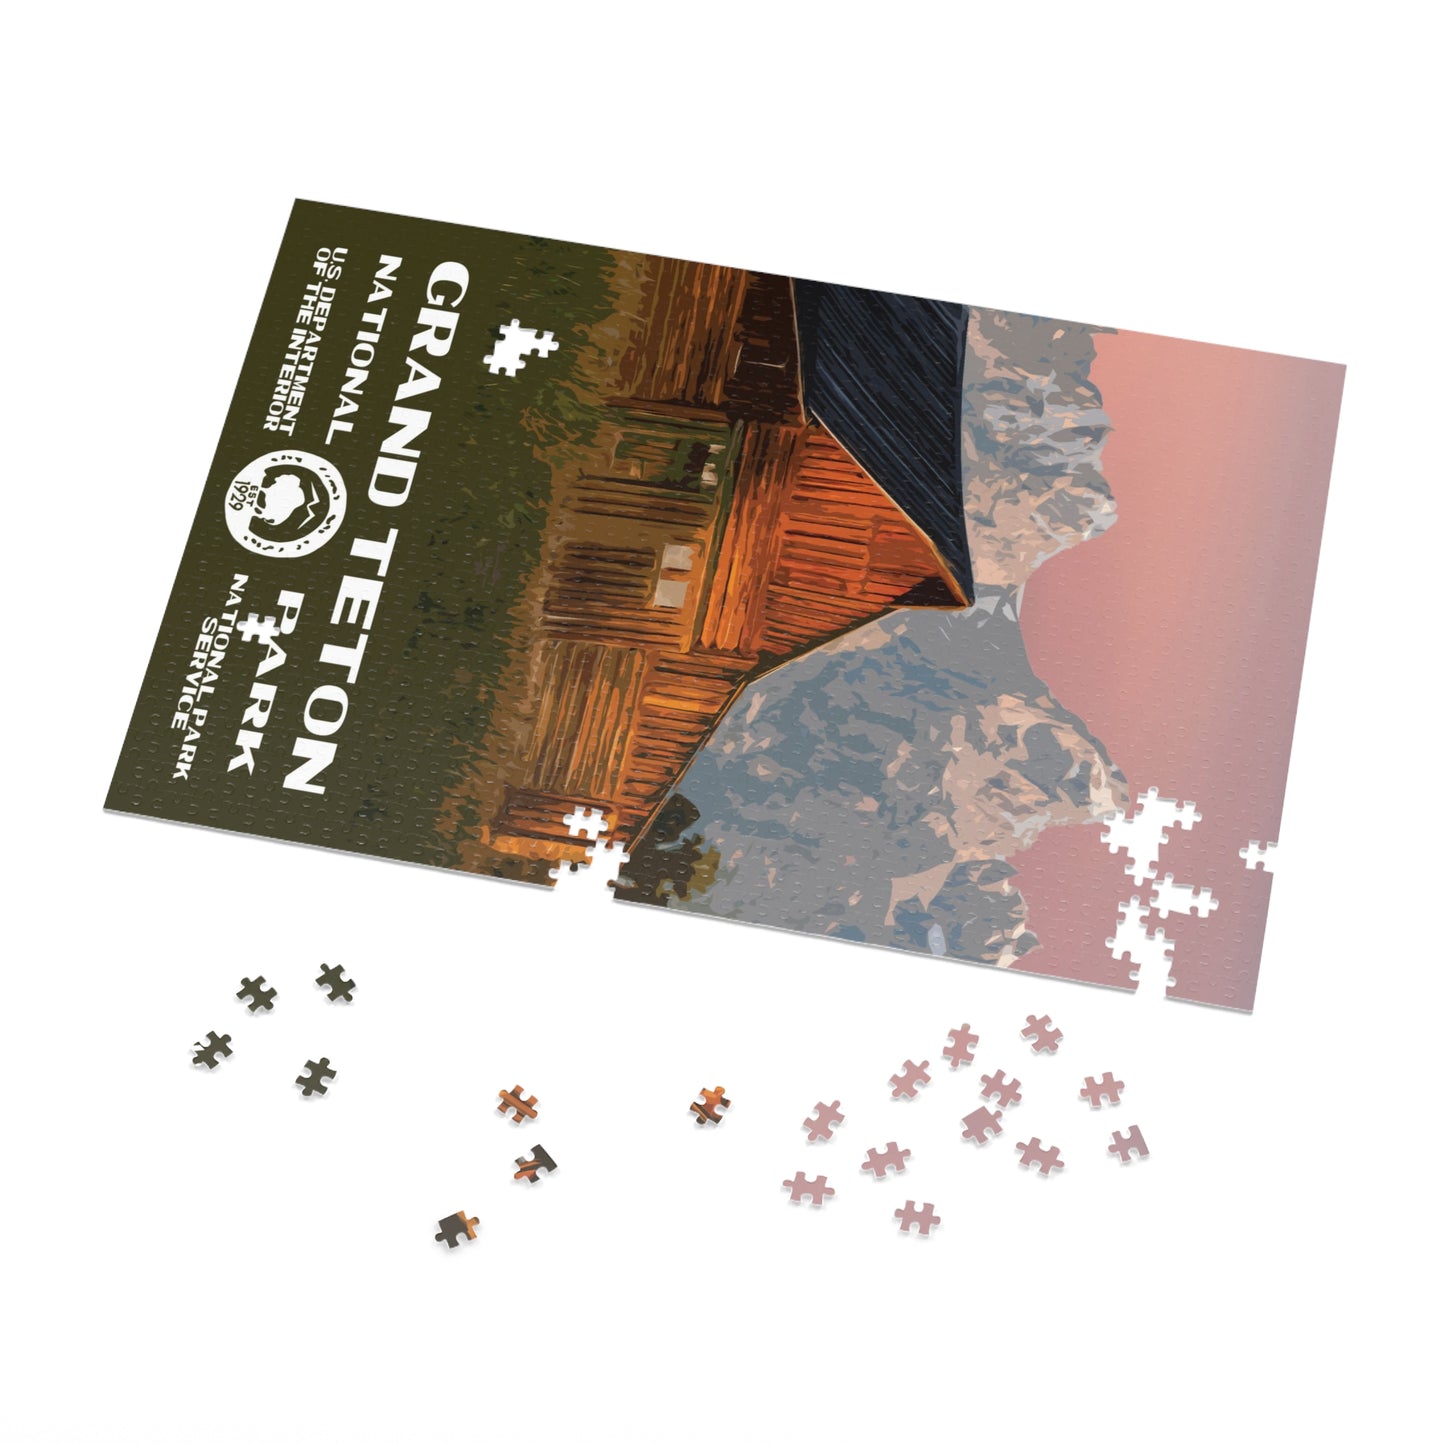 Grand Teton National Park Jigsaw Puzzle - Moulton Barn - 1000 Pieces